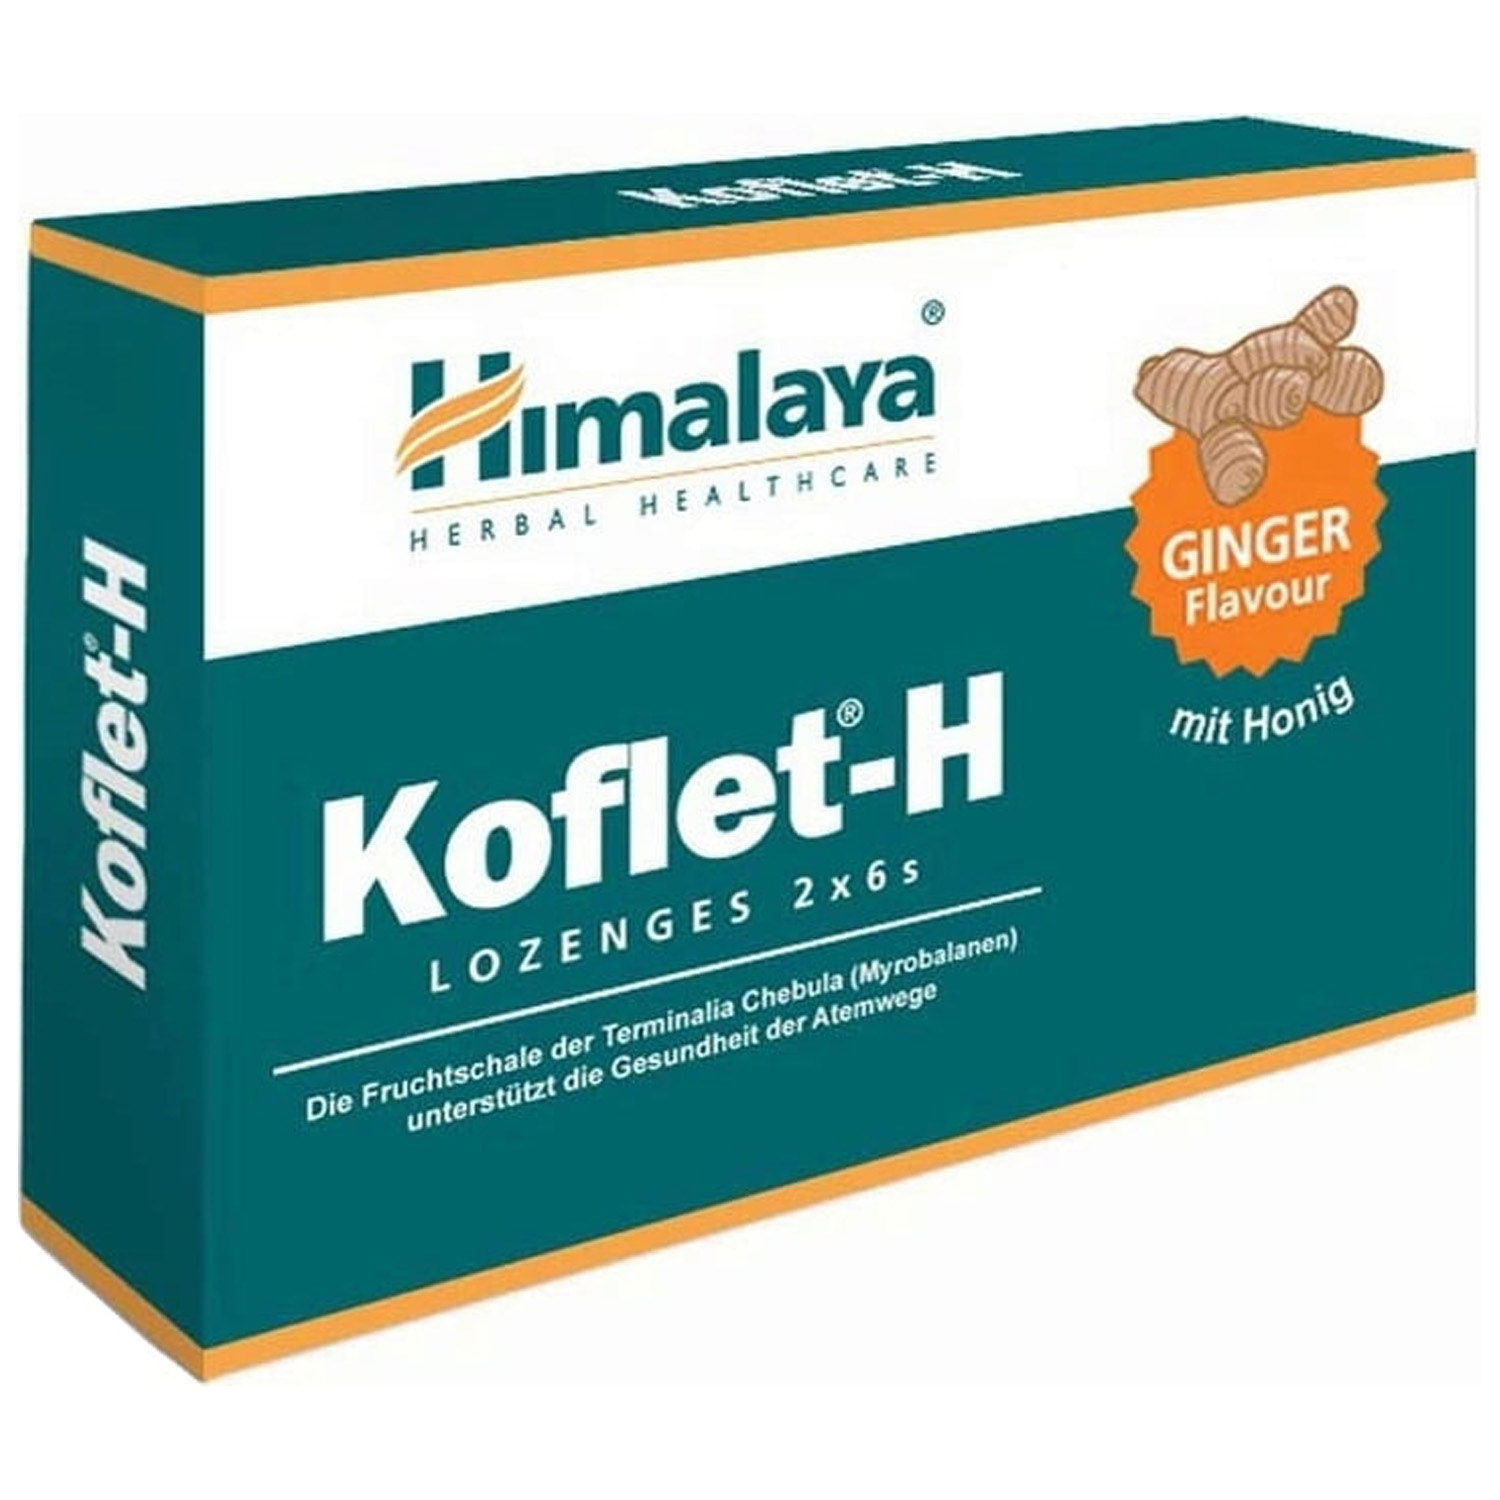 Himalaya Koflet-H Ginger, 6 Lozenges, Pack of 6 S